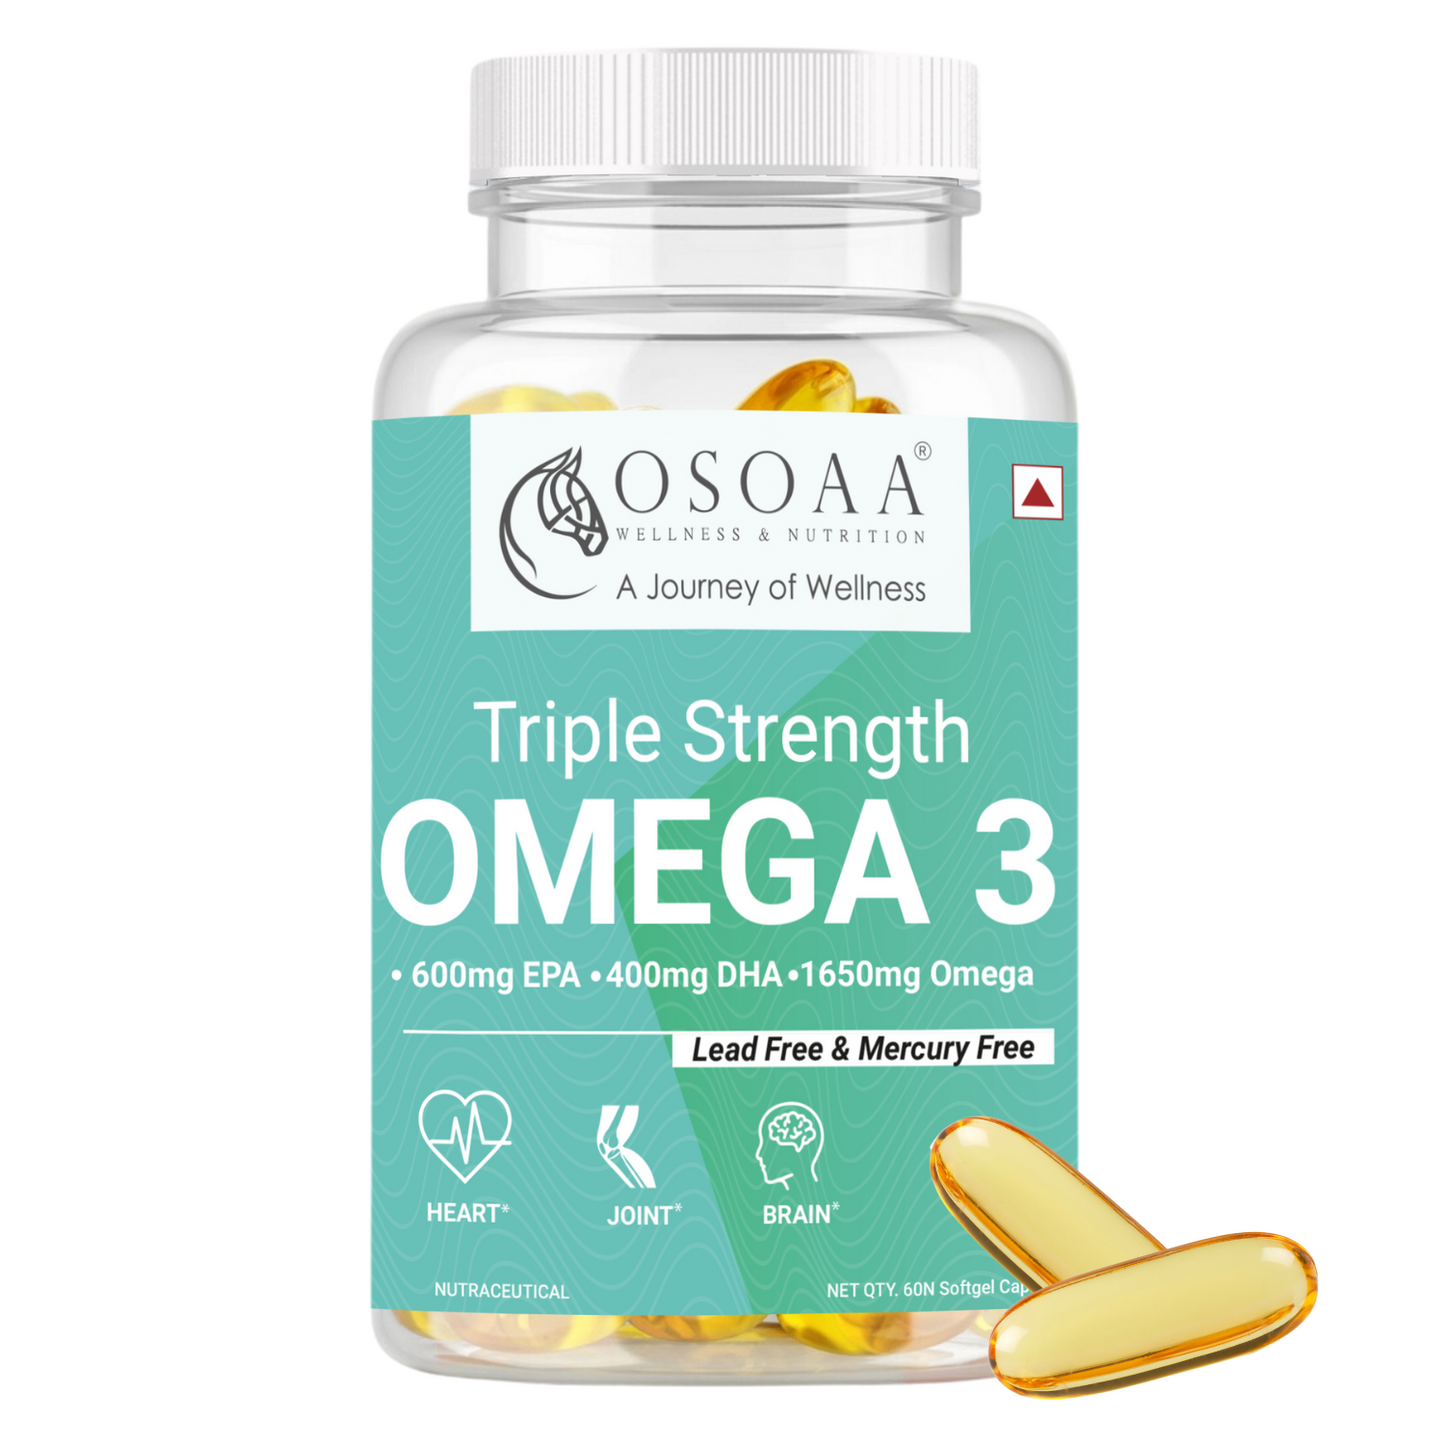 OSOAA Whey Matrix Hydro Whey 1Kg - Irish Chocolate  || Triple Strength Fish Oil 1650mg Omega 3